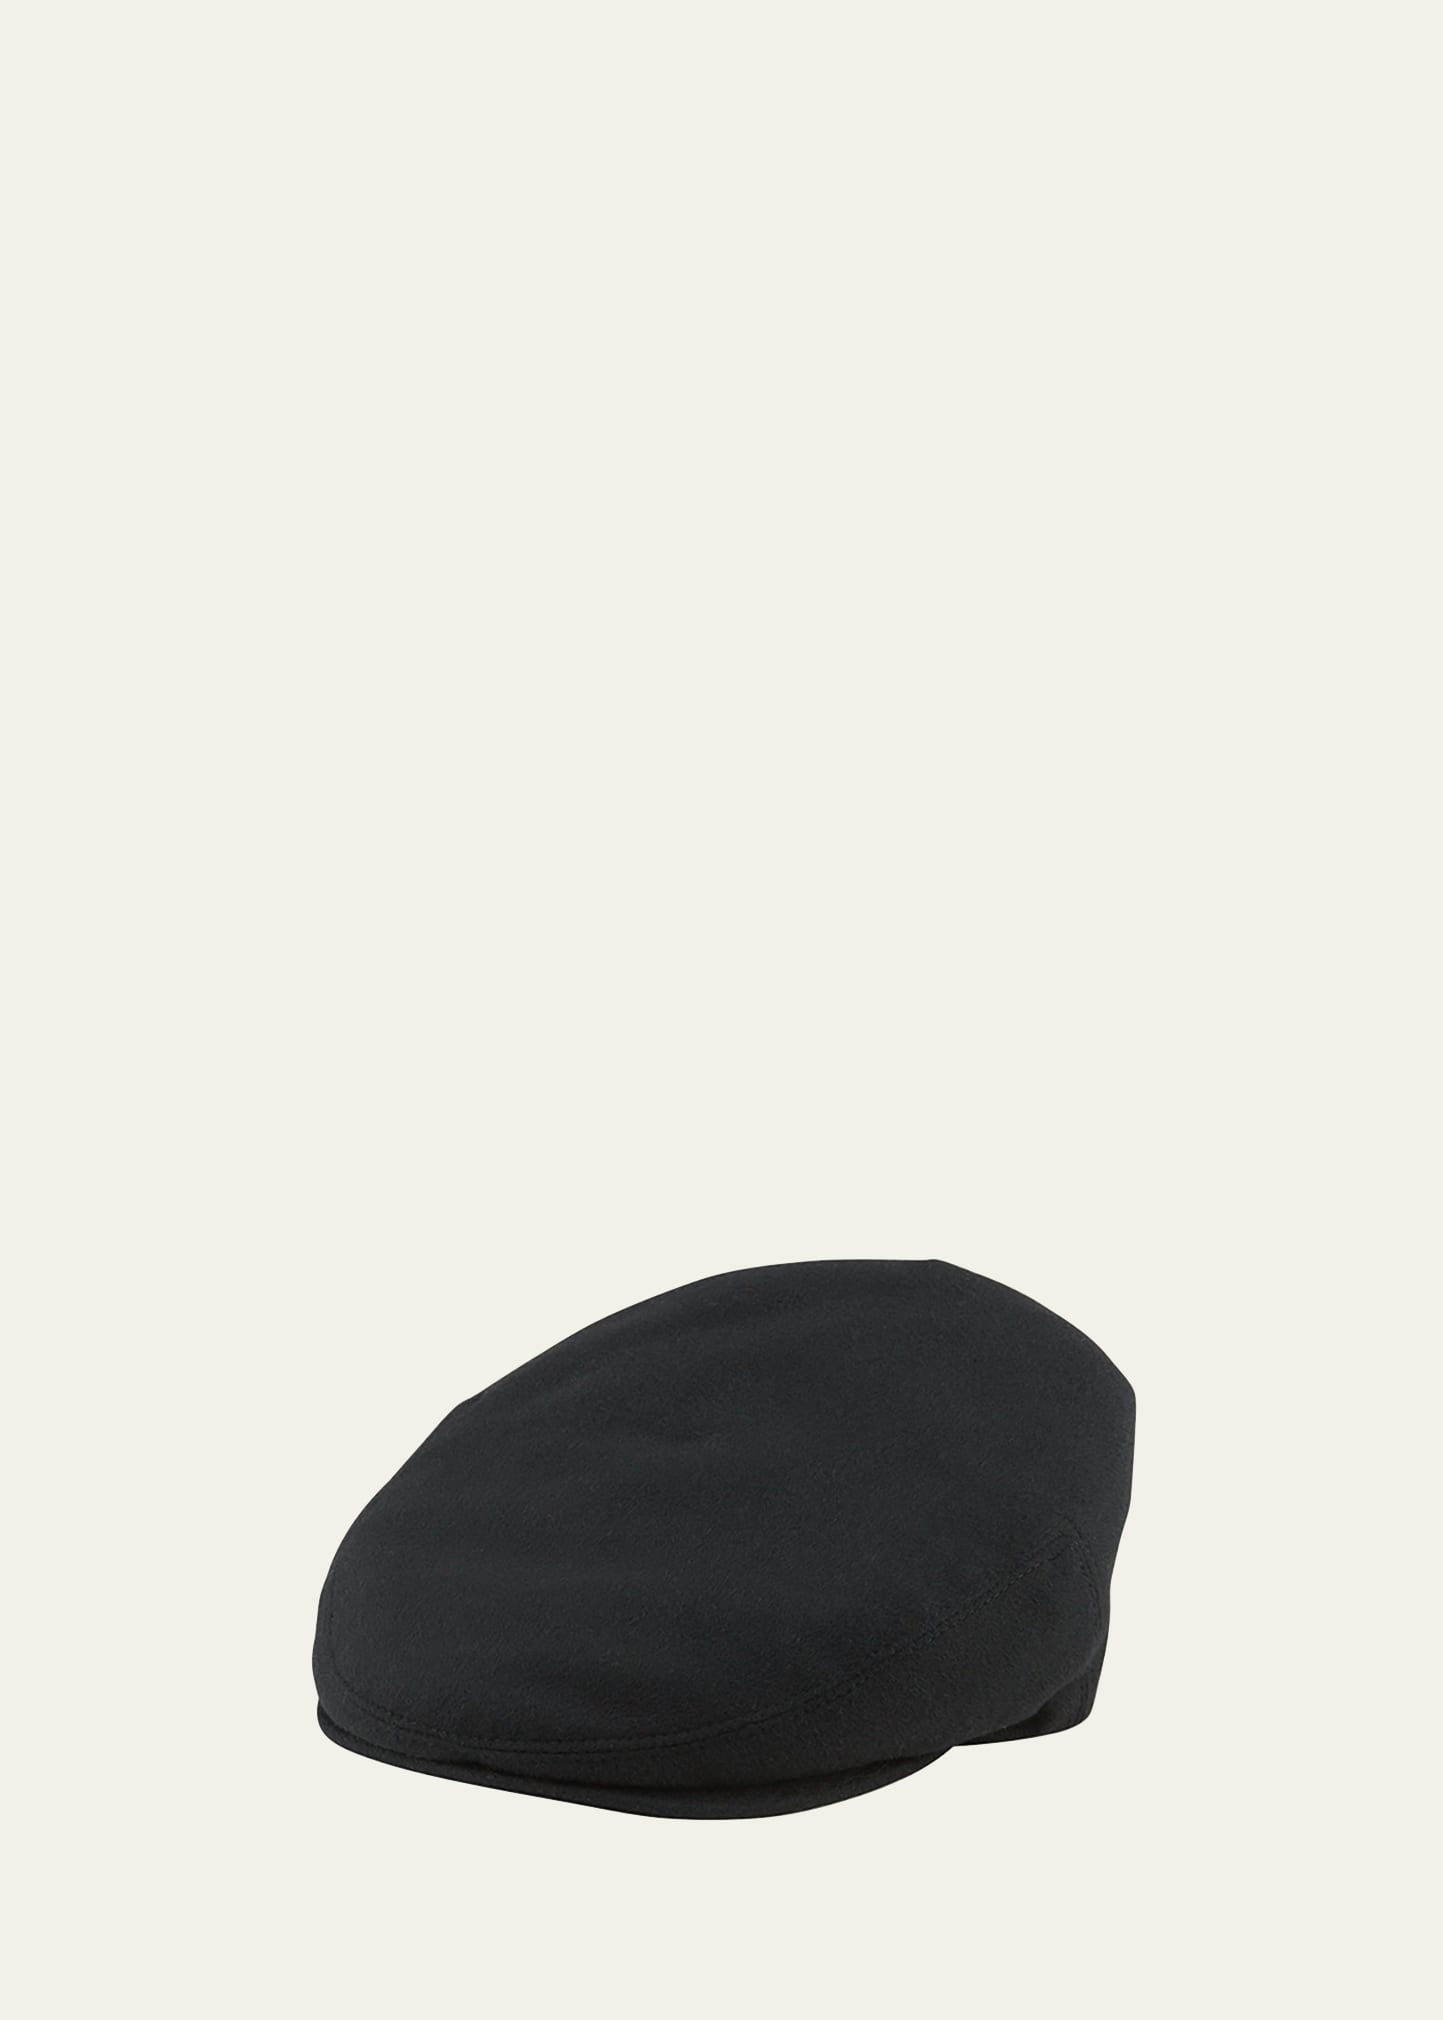 Goodman's Men's Solid Cashmere Driver Hat